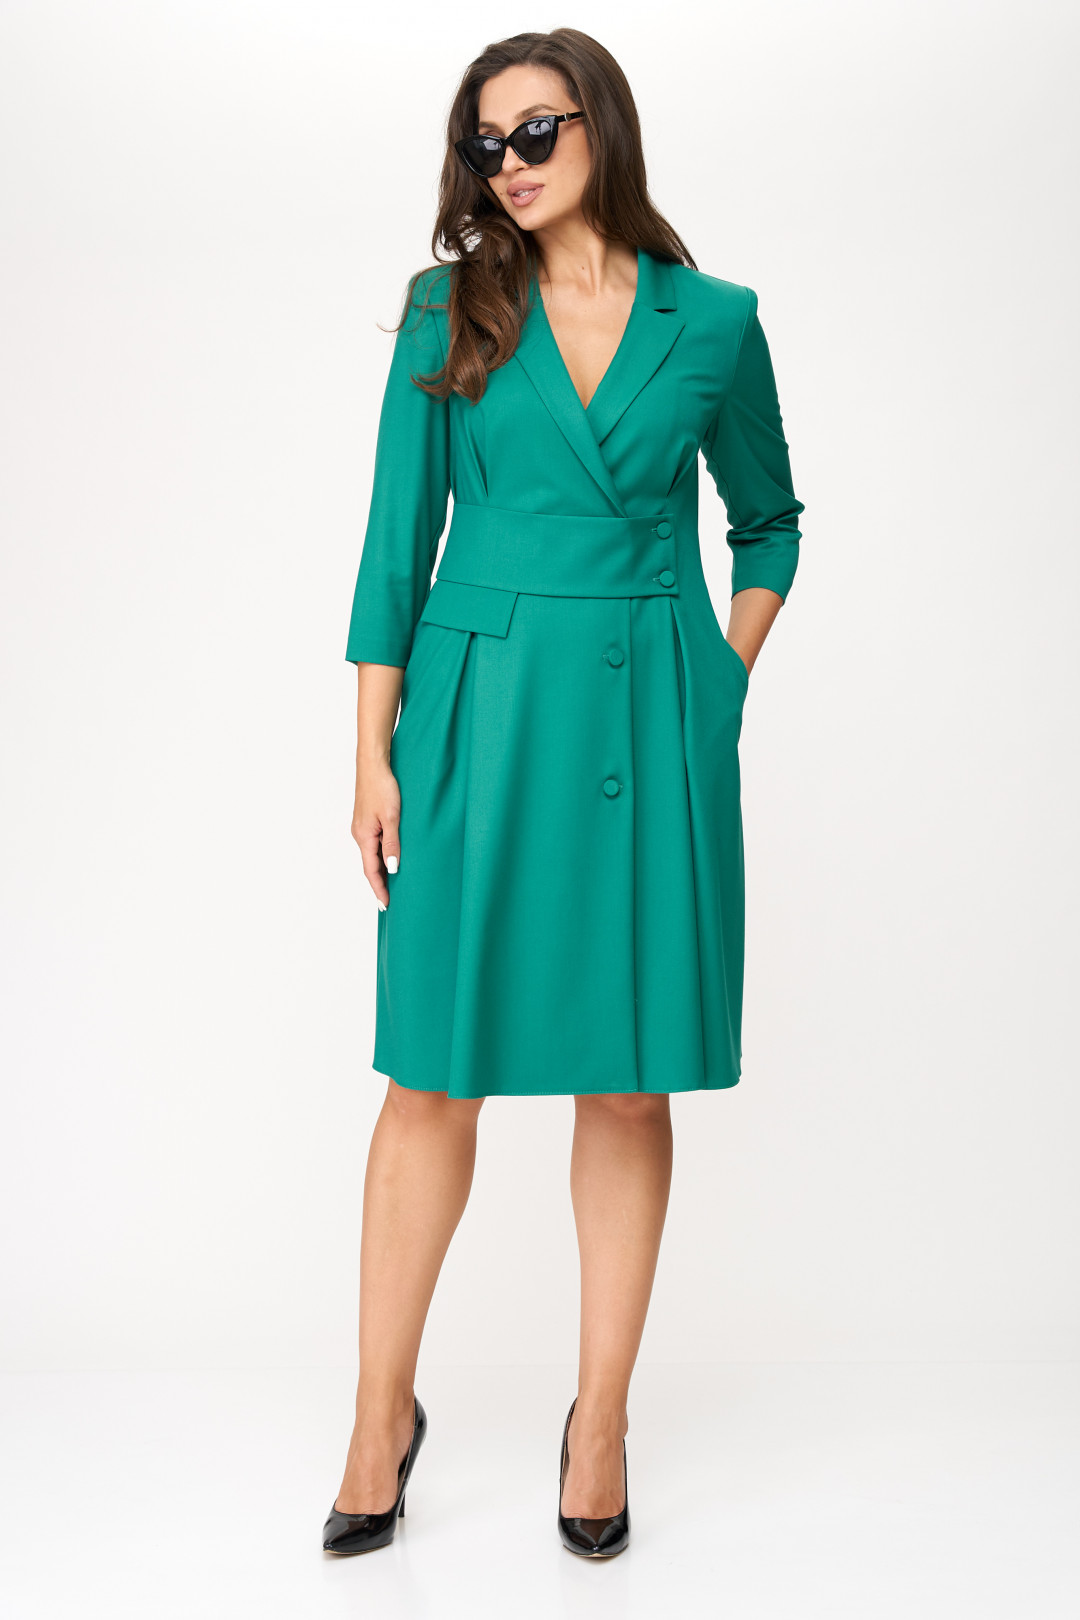 Платье Карина Делюкс М-1154 зелёный